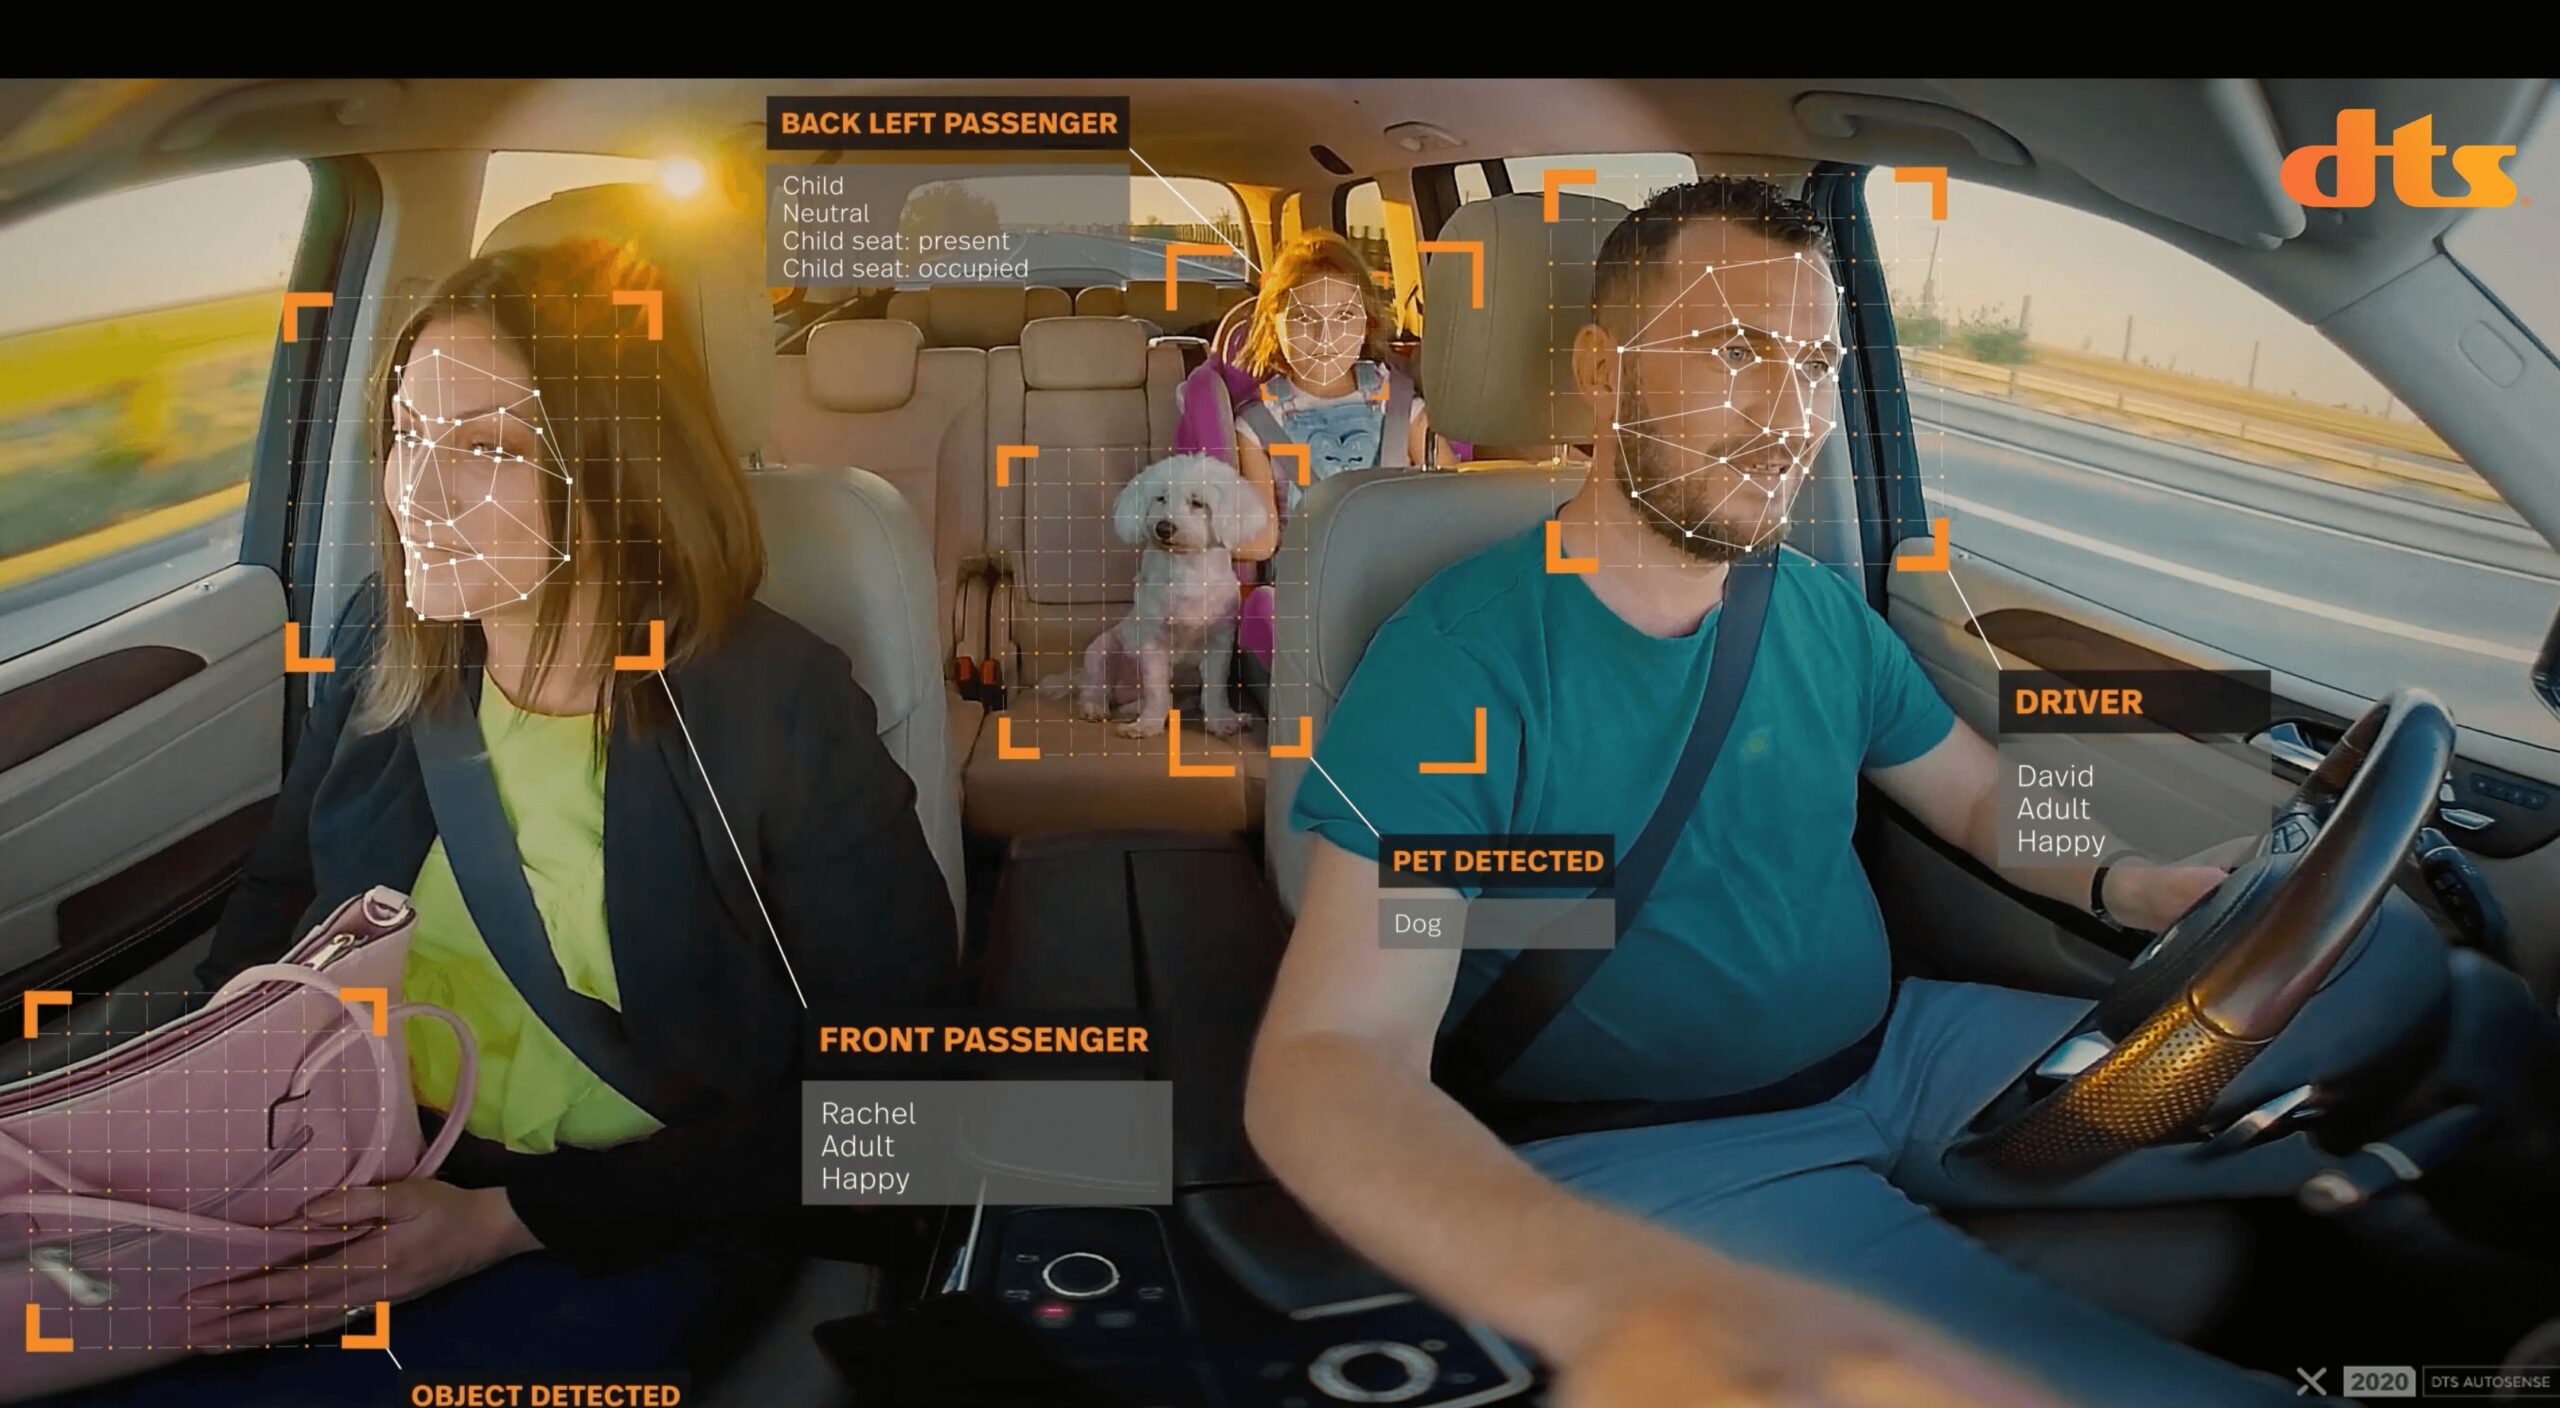 DTS AutoSense monitors all vehicle occupants 